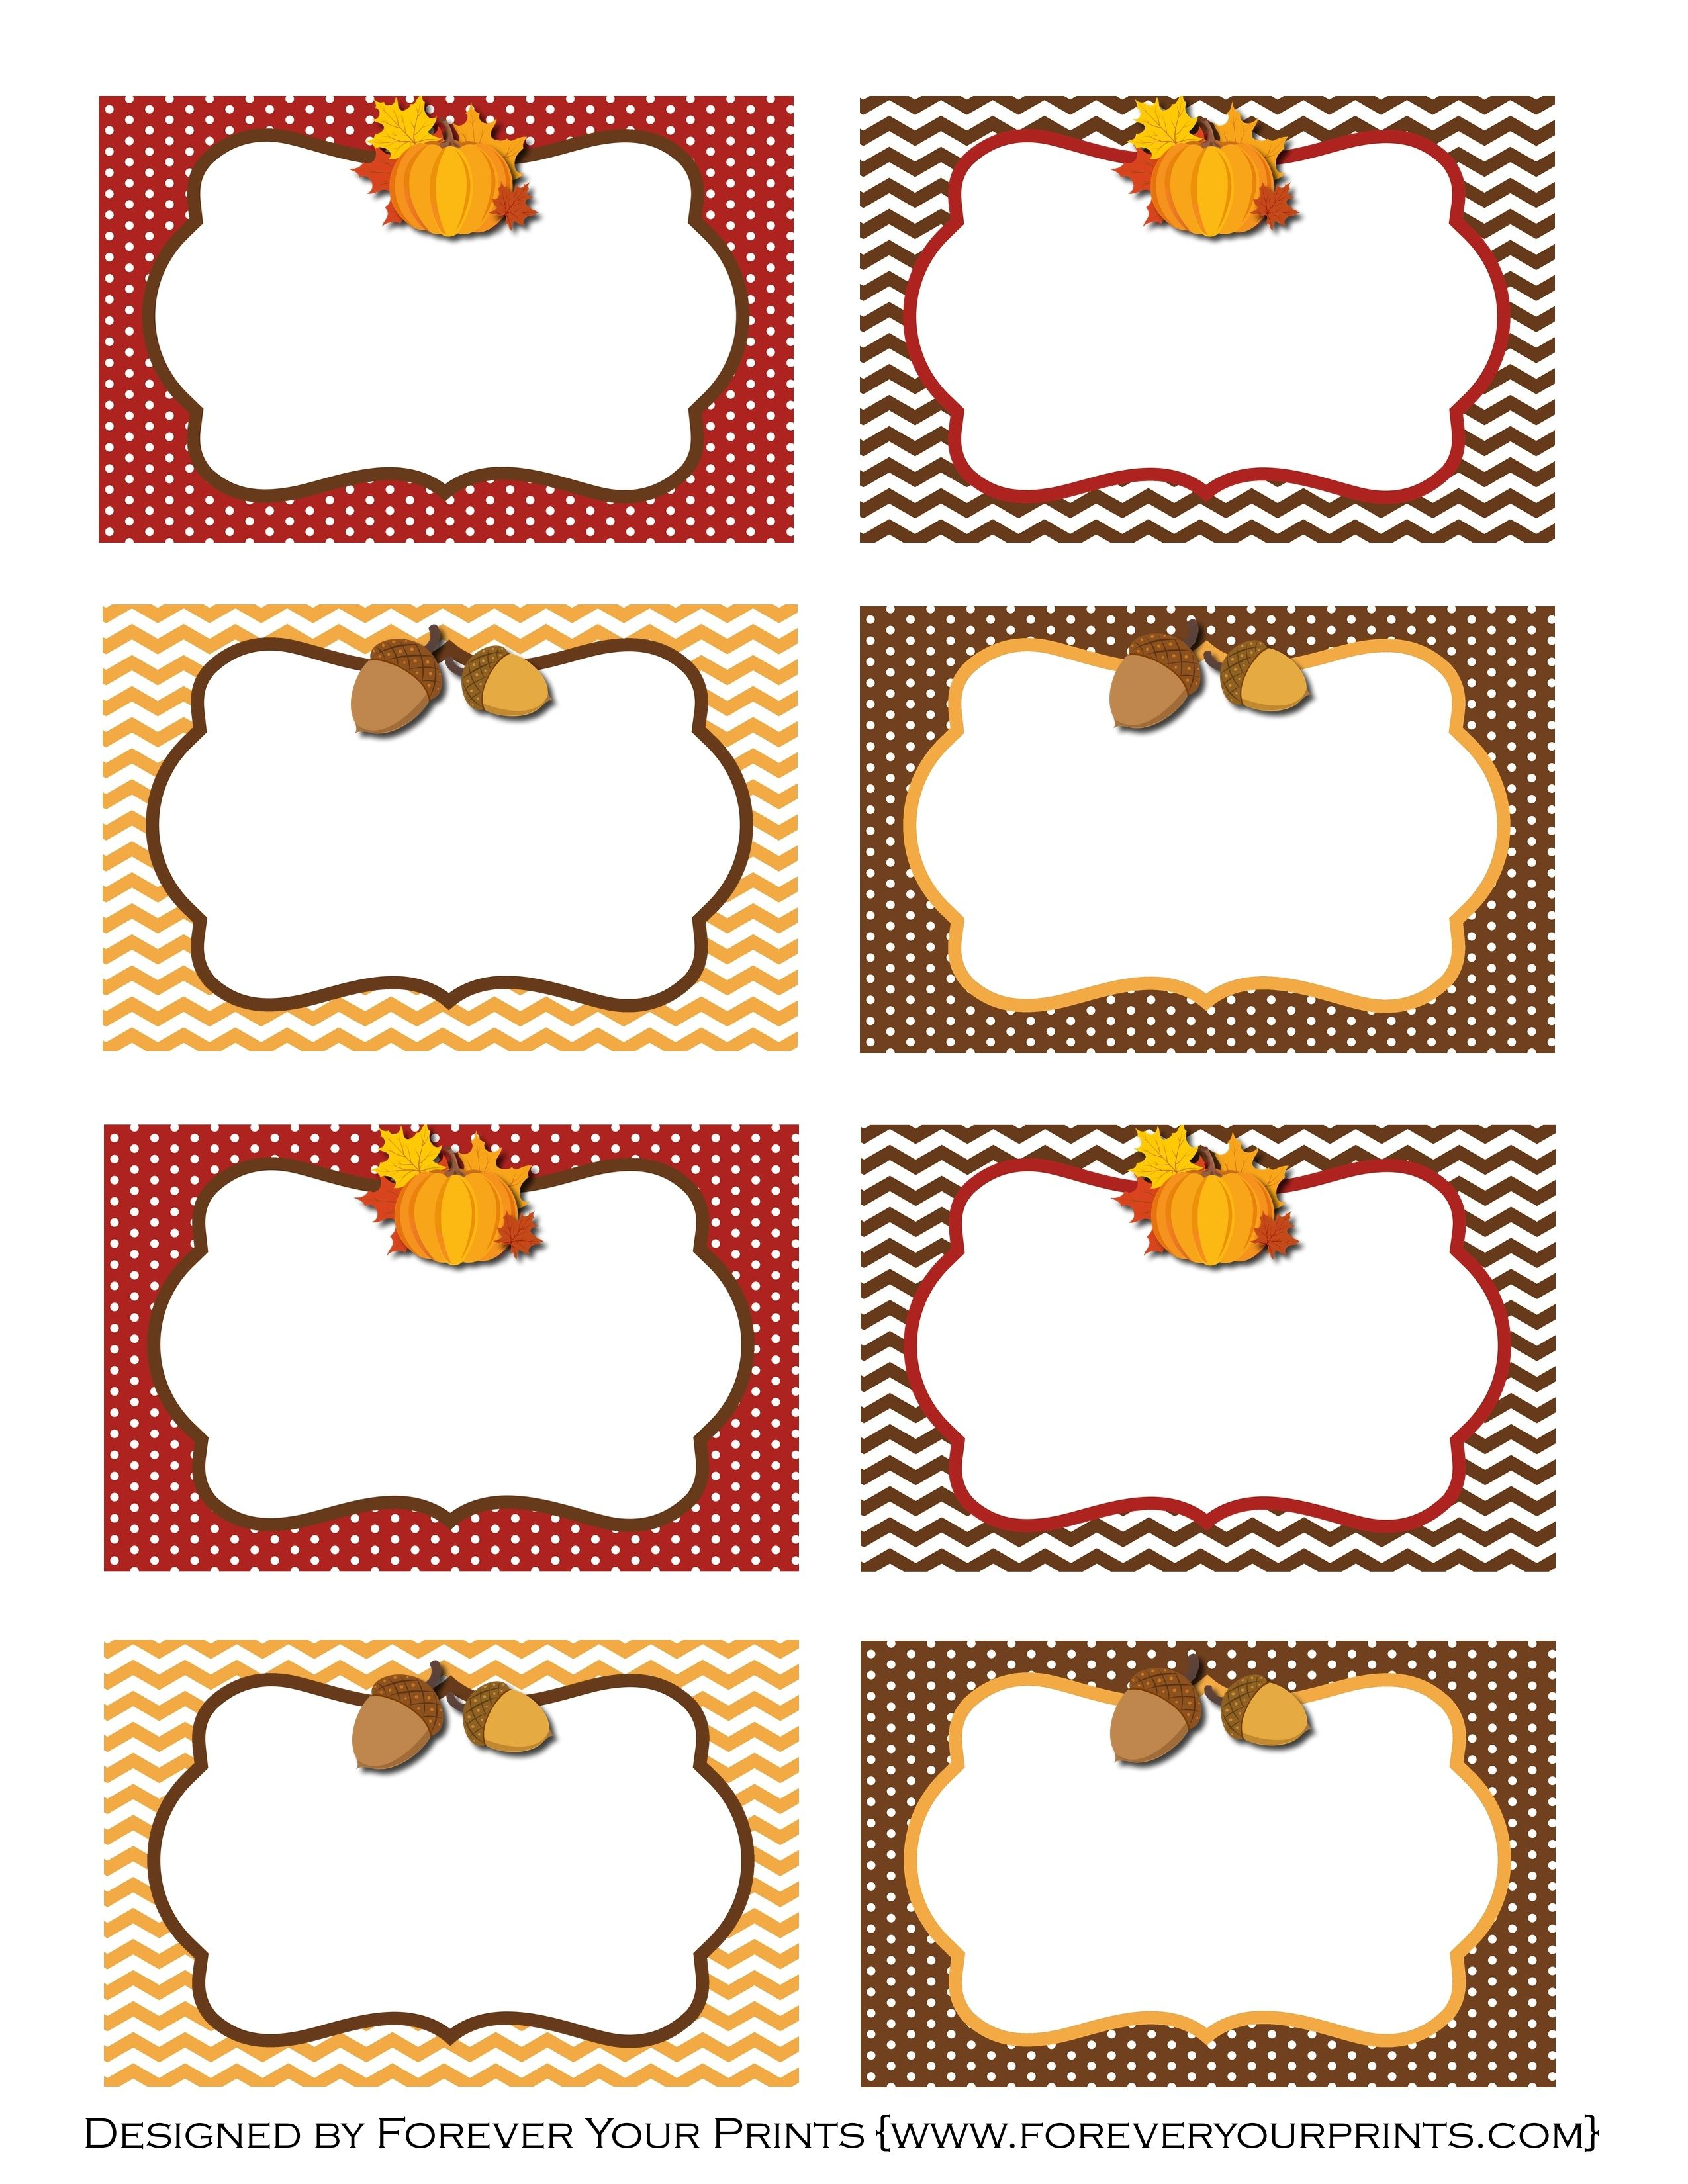 Pinirene Bortolussi On Thanksgiving | Pinterest | Free - Free Printable Thanksgiving Place Cards To Color